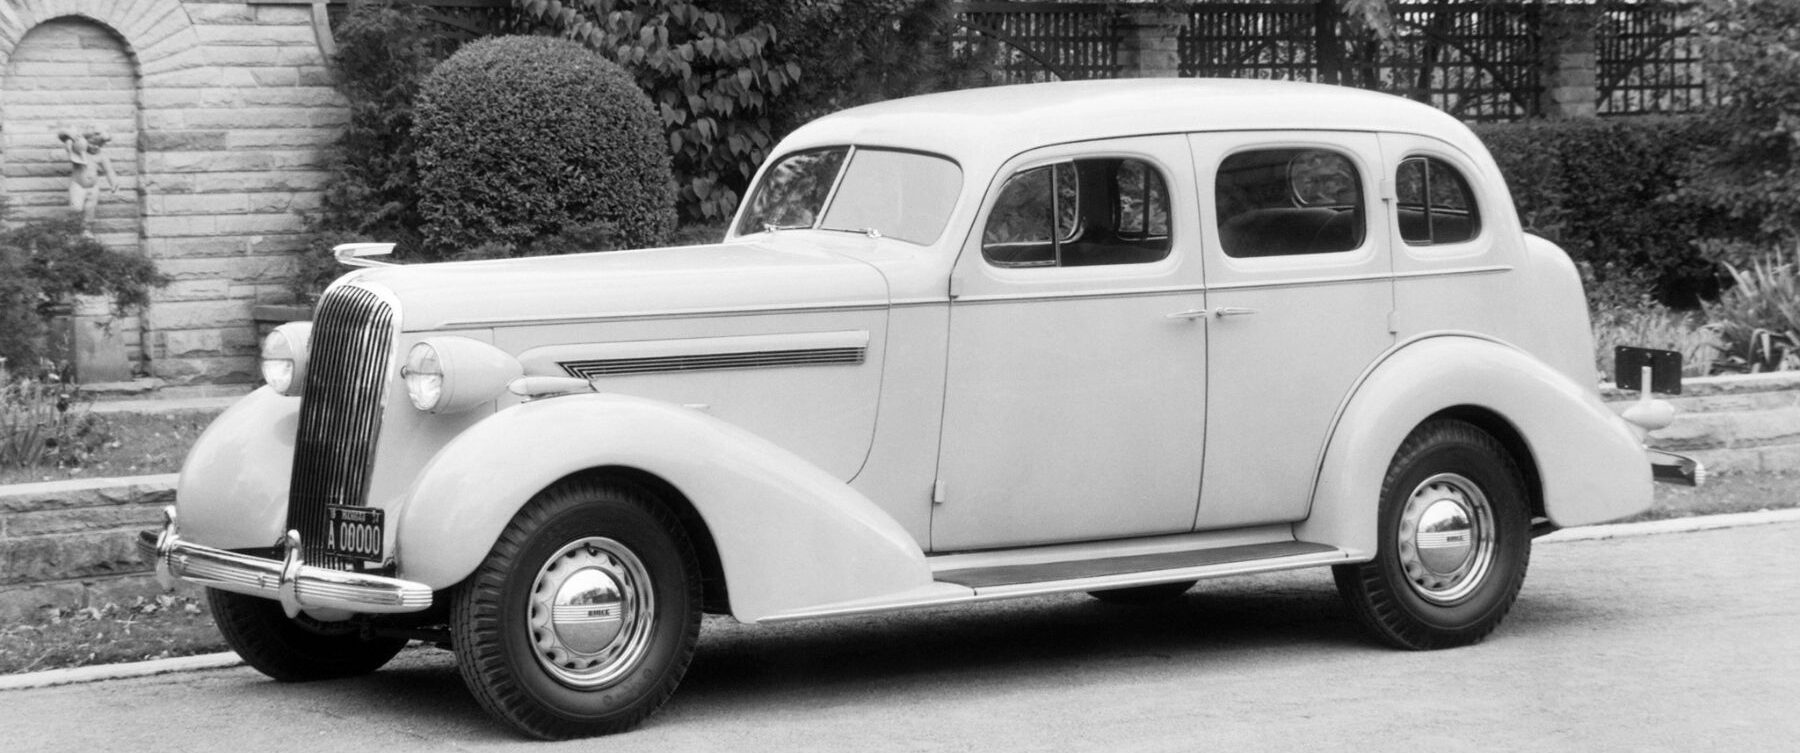 Buick Century 1936 года, давно забытый дедушка американского маслкара